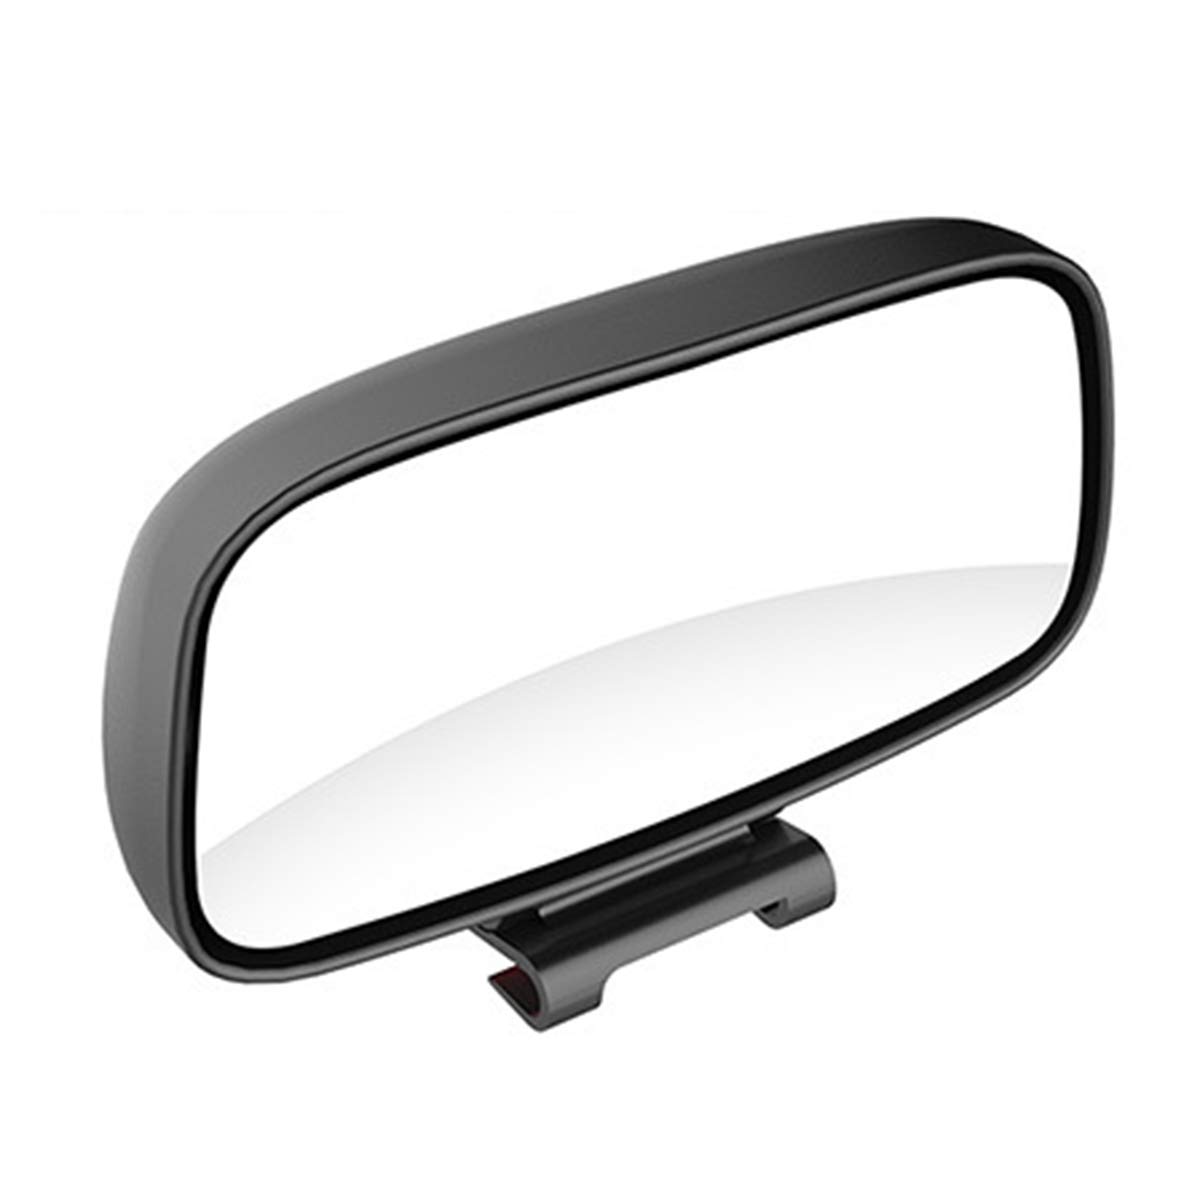 Toter-Winkel-Spiegel Esenlong Universal Auto Blind Spot Spiegel Drehung Weitwinkel Verstellbar Rückspiegel Universal Winkel Spiegel - Schwarz von Esenlong